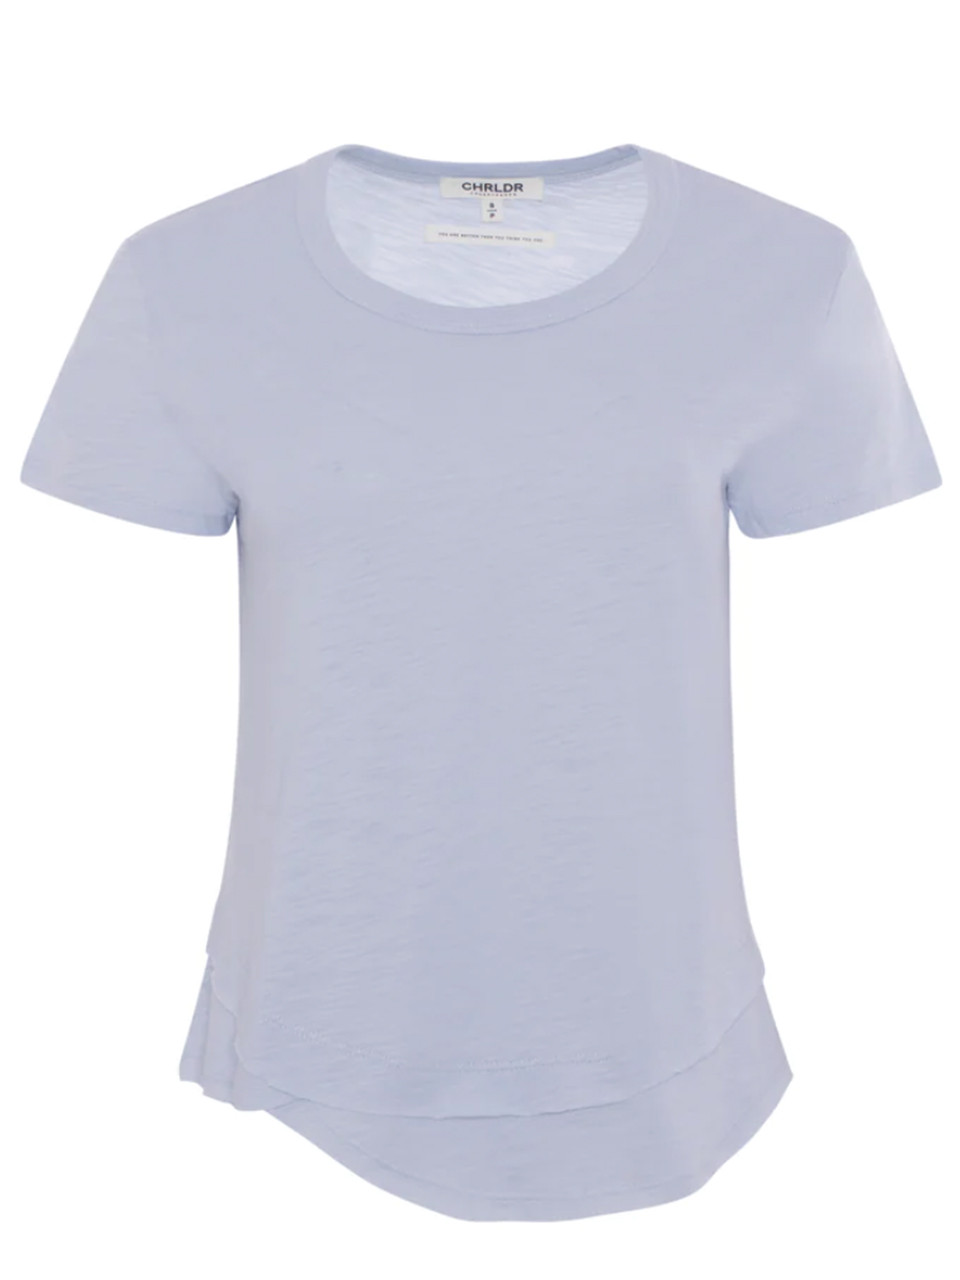 CHRLDR Ava Scoop Mock Layer T-Shirt in Limestone Blue Product Shot 